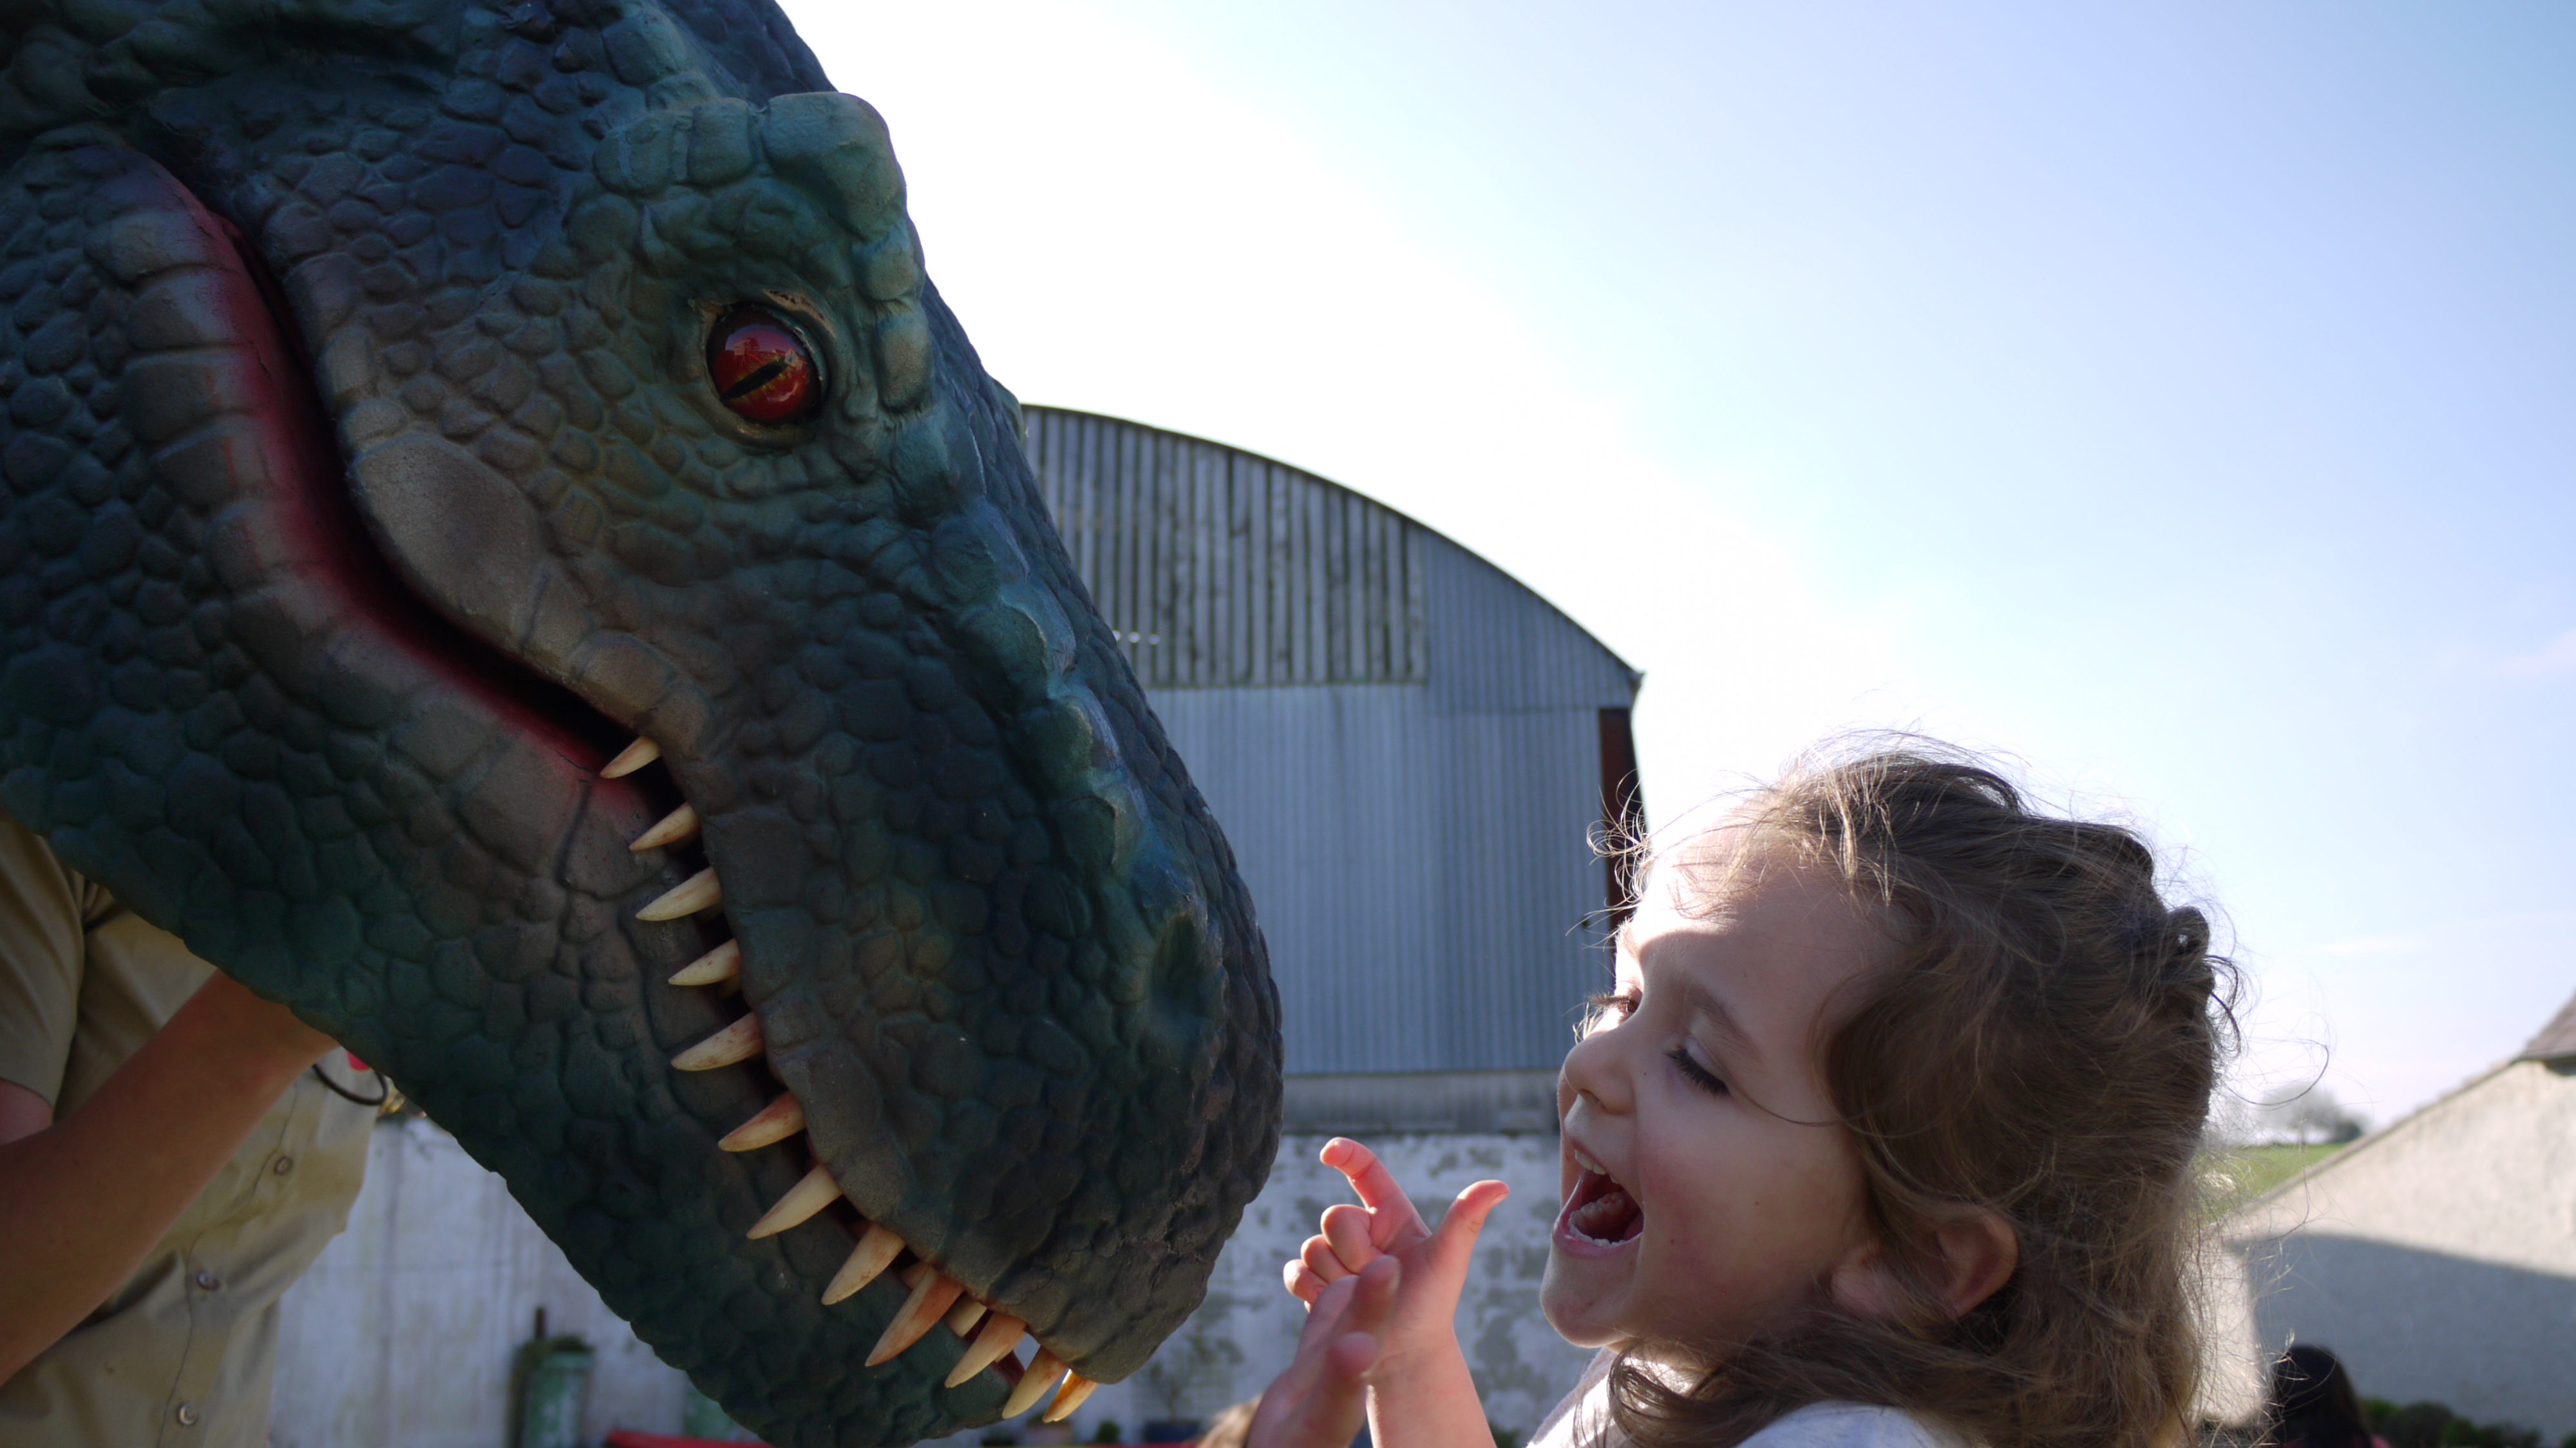 Big kiss for Roary the dinosaur